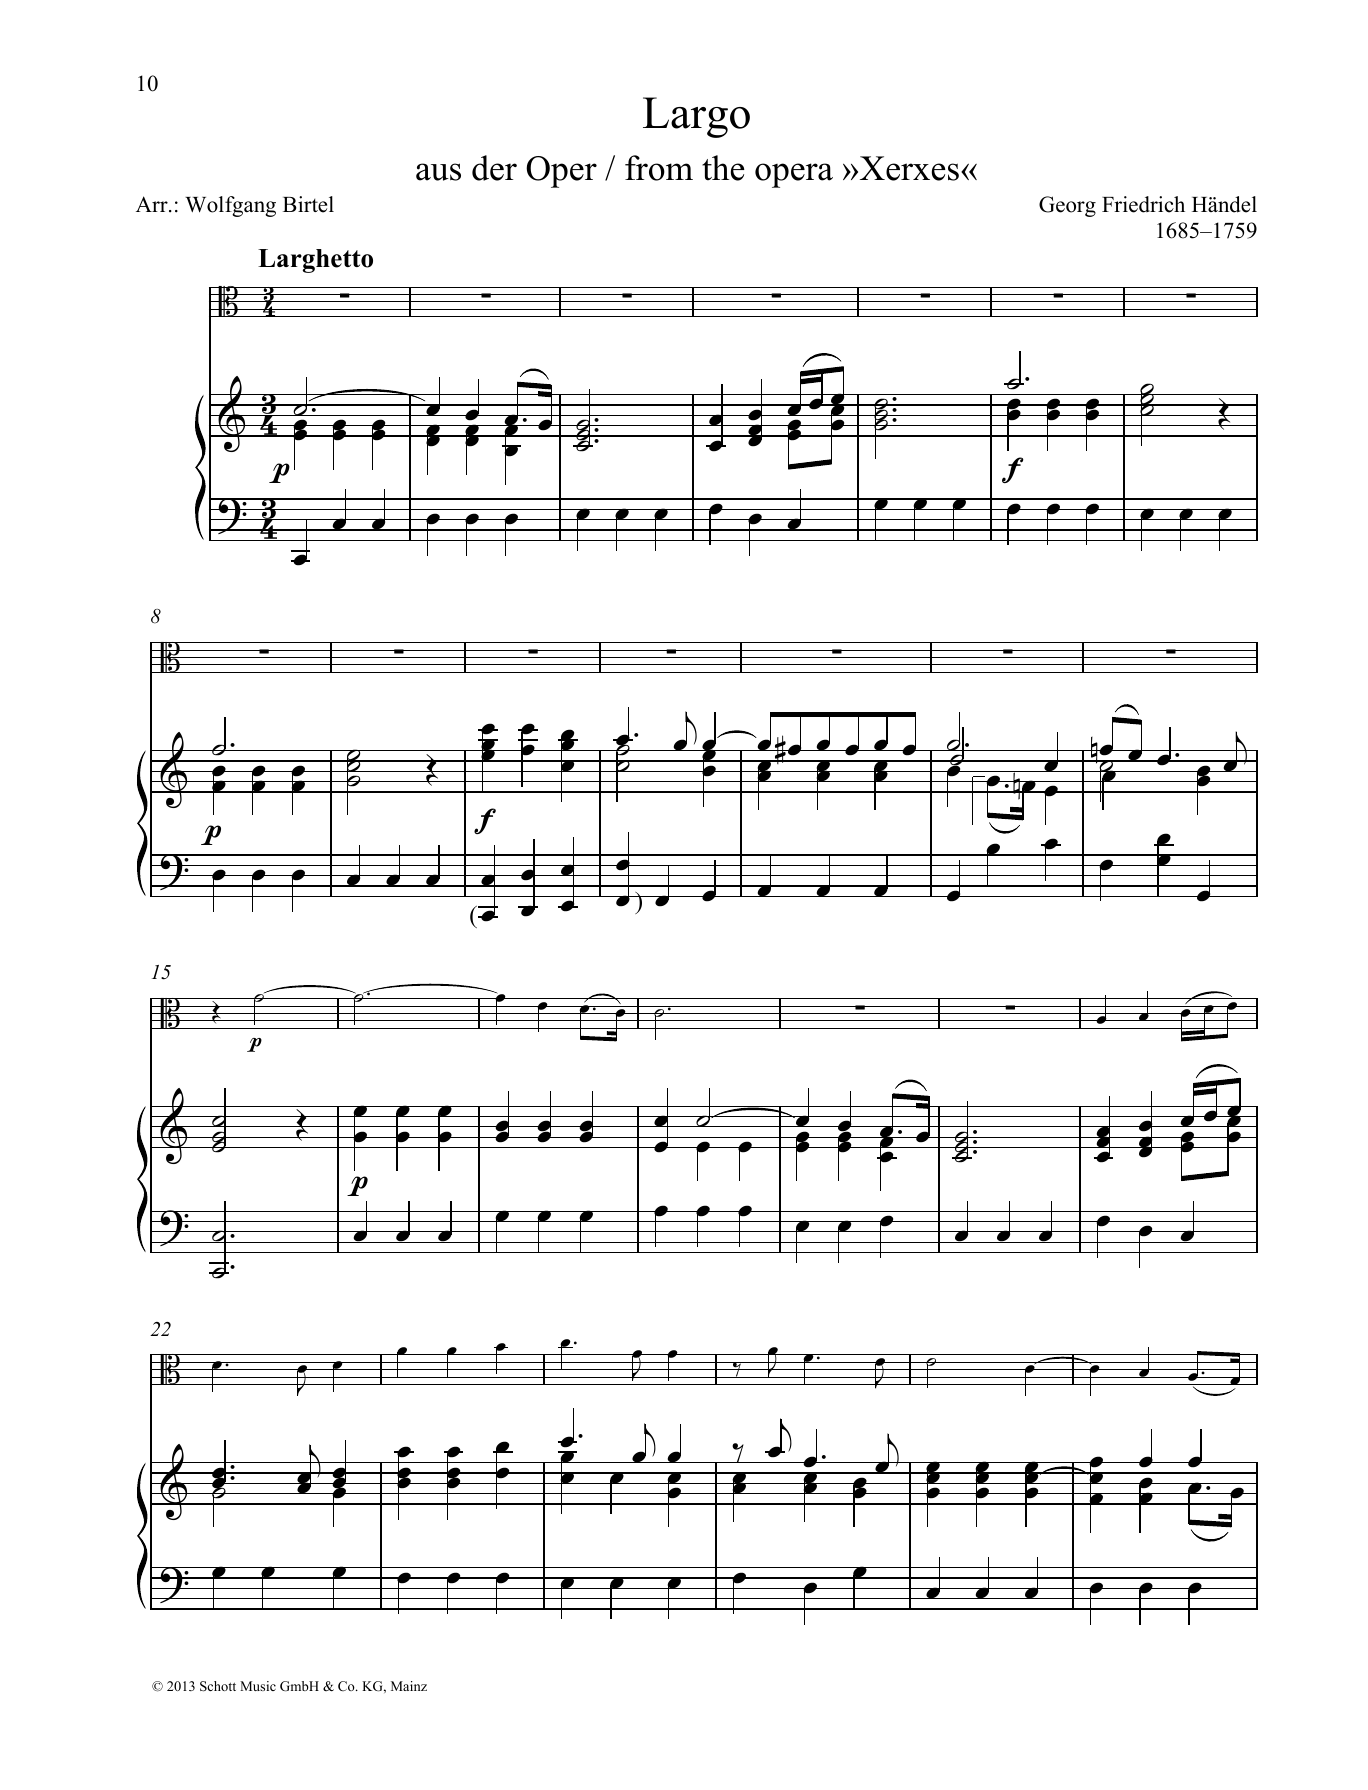 Download George Frideric Handel Largo Sheet Music